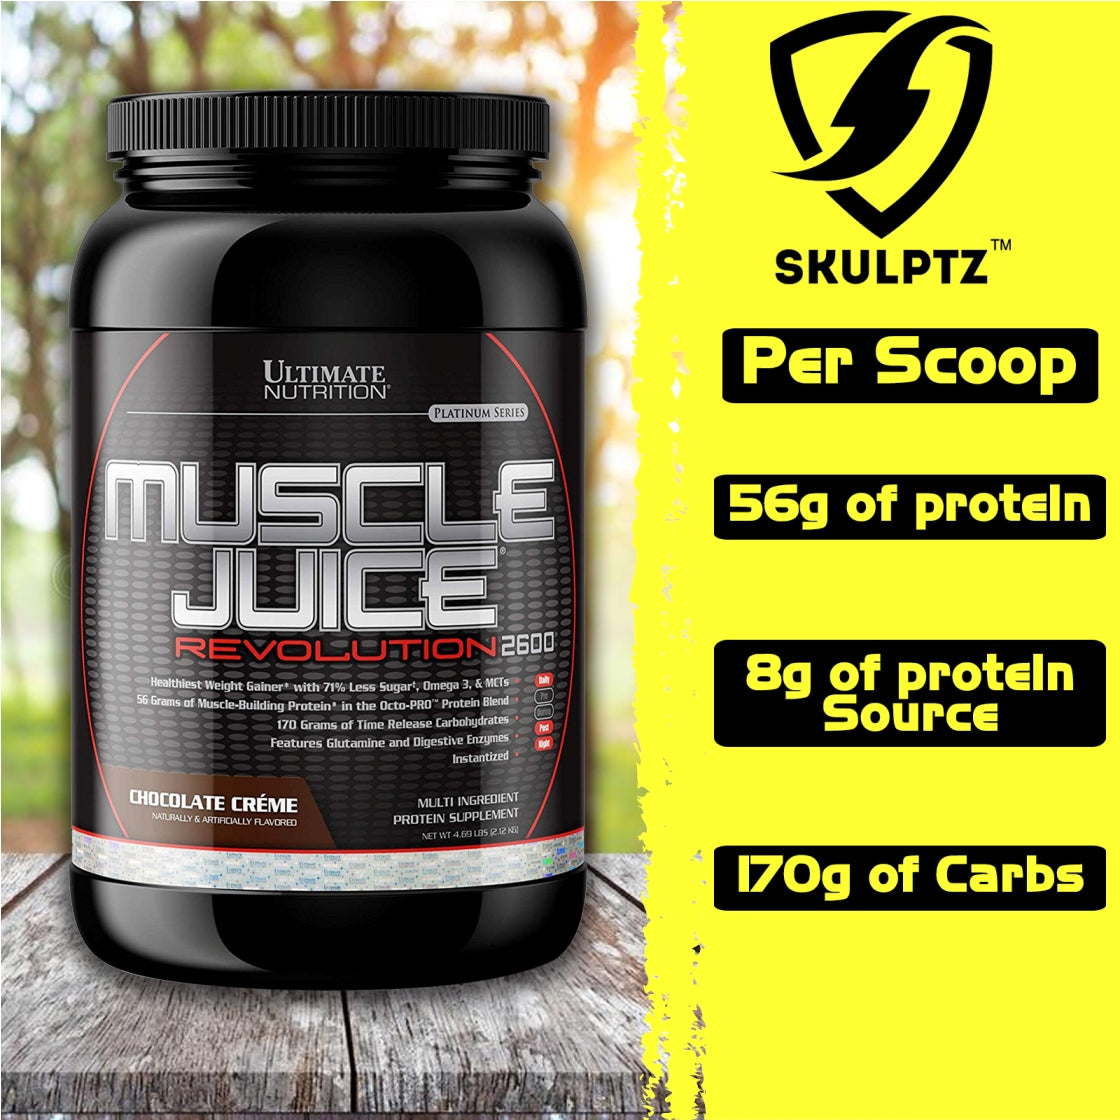 Ultimate Nutrition Muscle Juice Revolution 2600 4.6 lb - skulptz